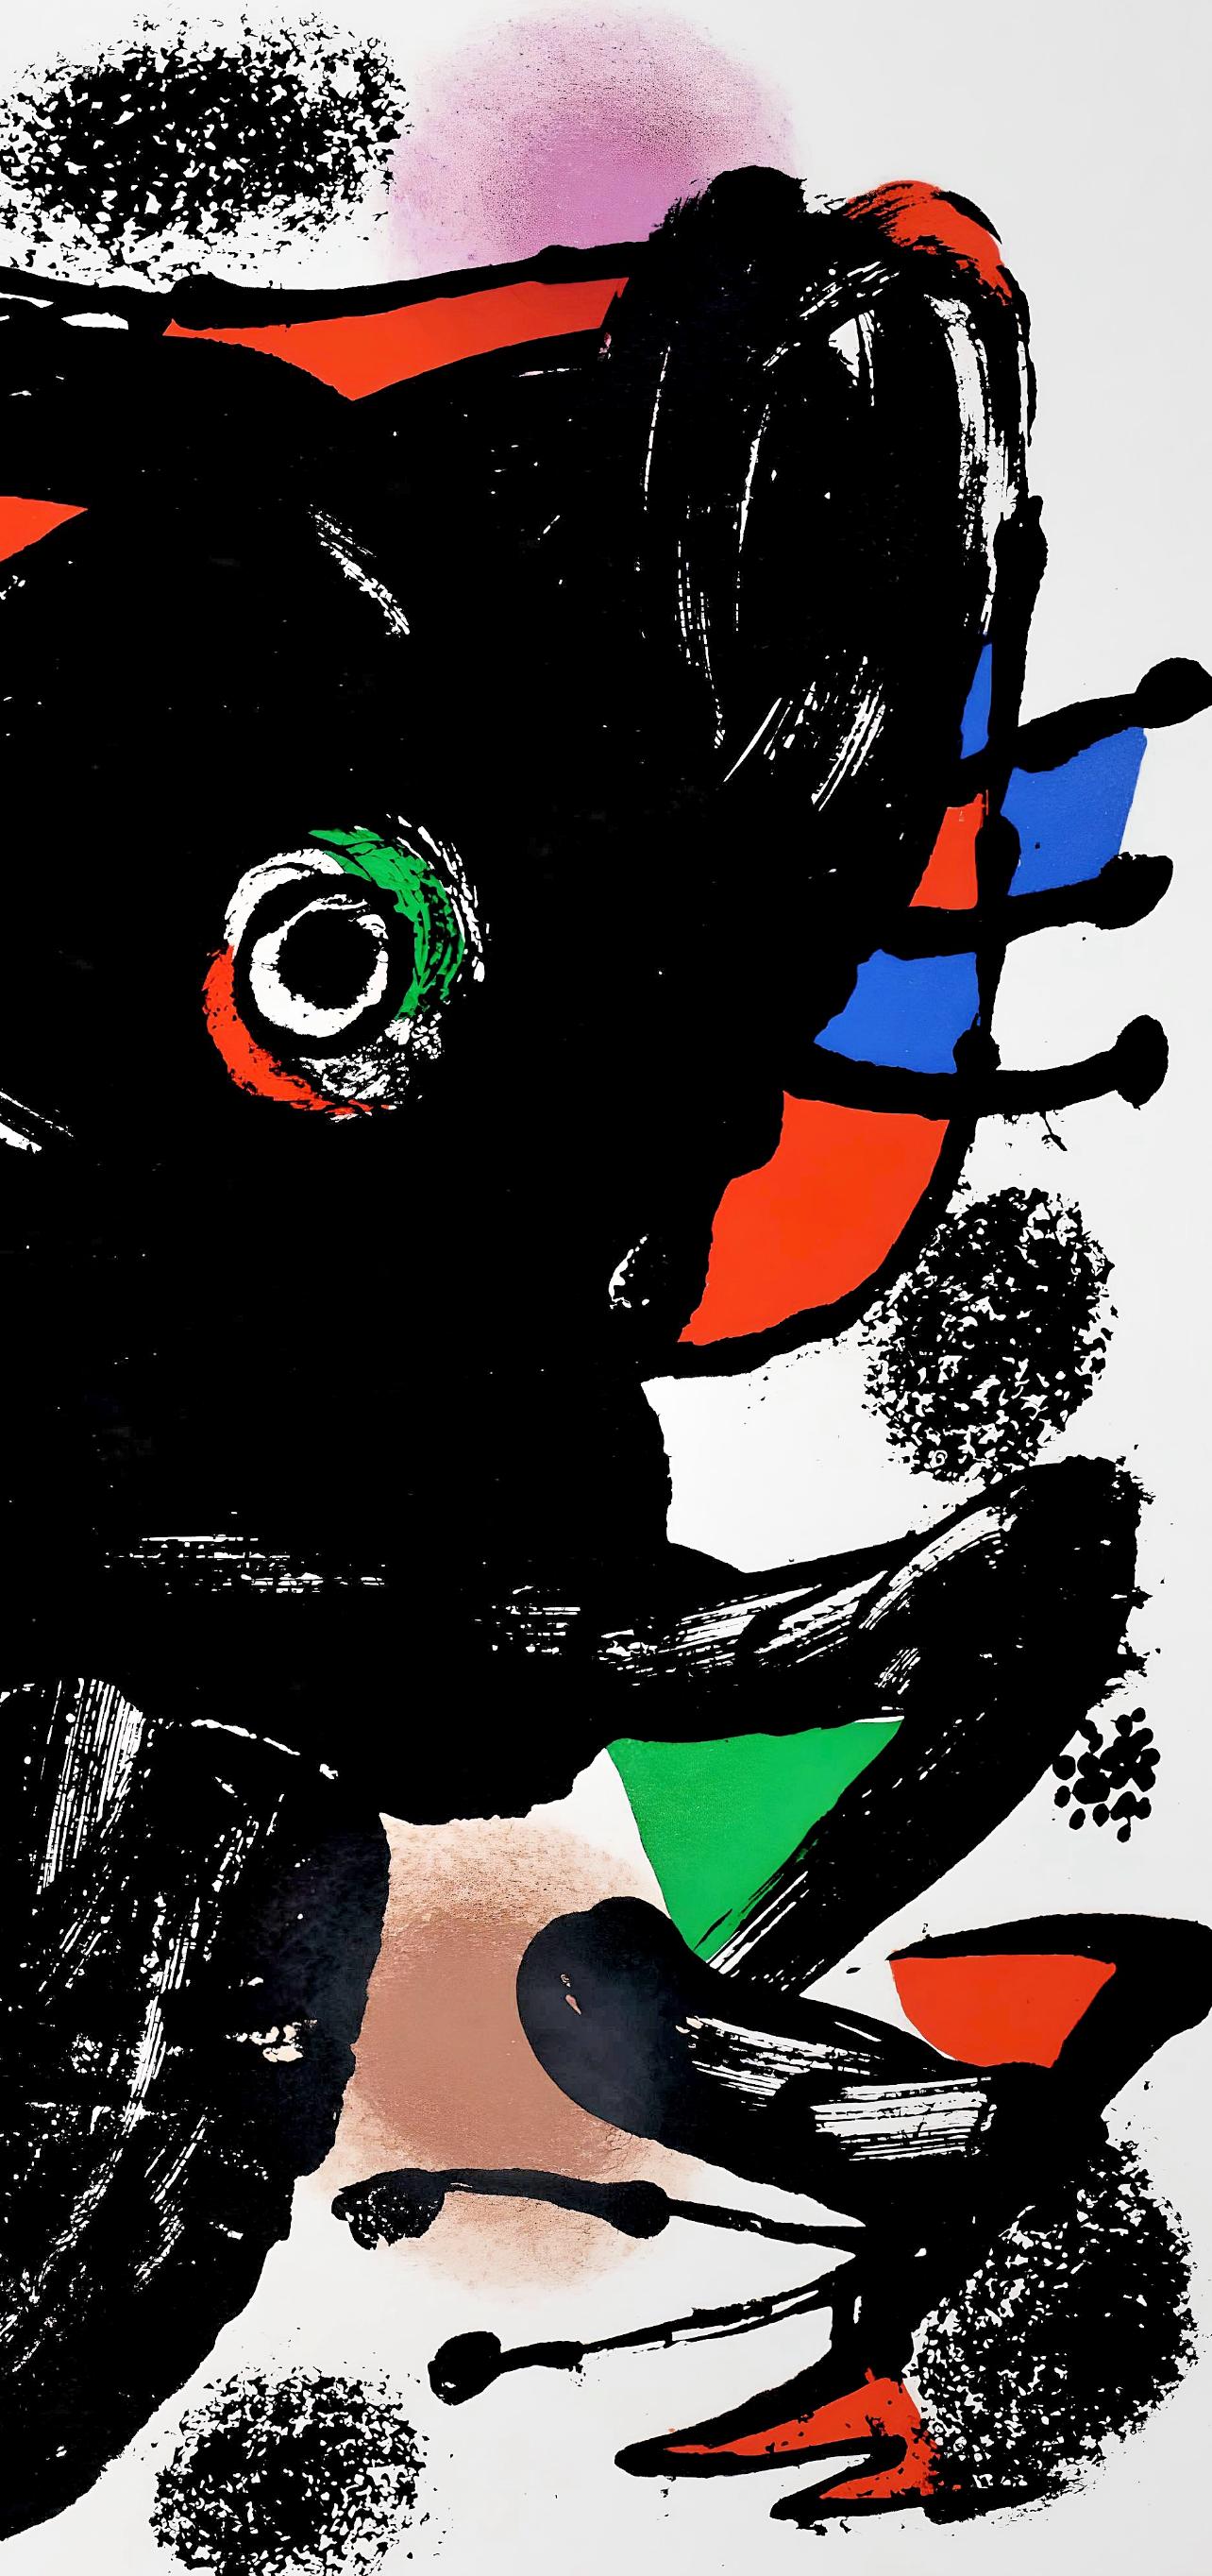 Miró, Komposition, XXe Siècle (nach) – Print von Joan Miró